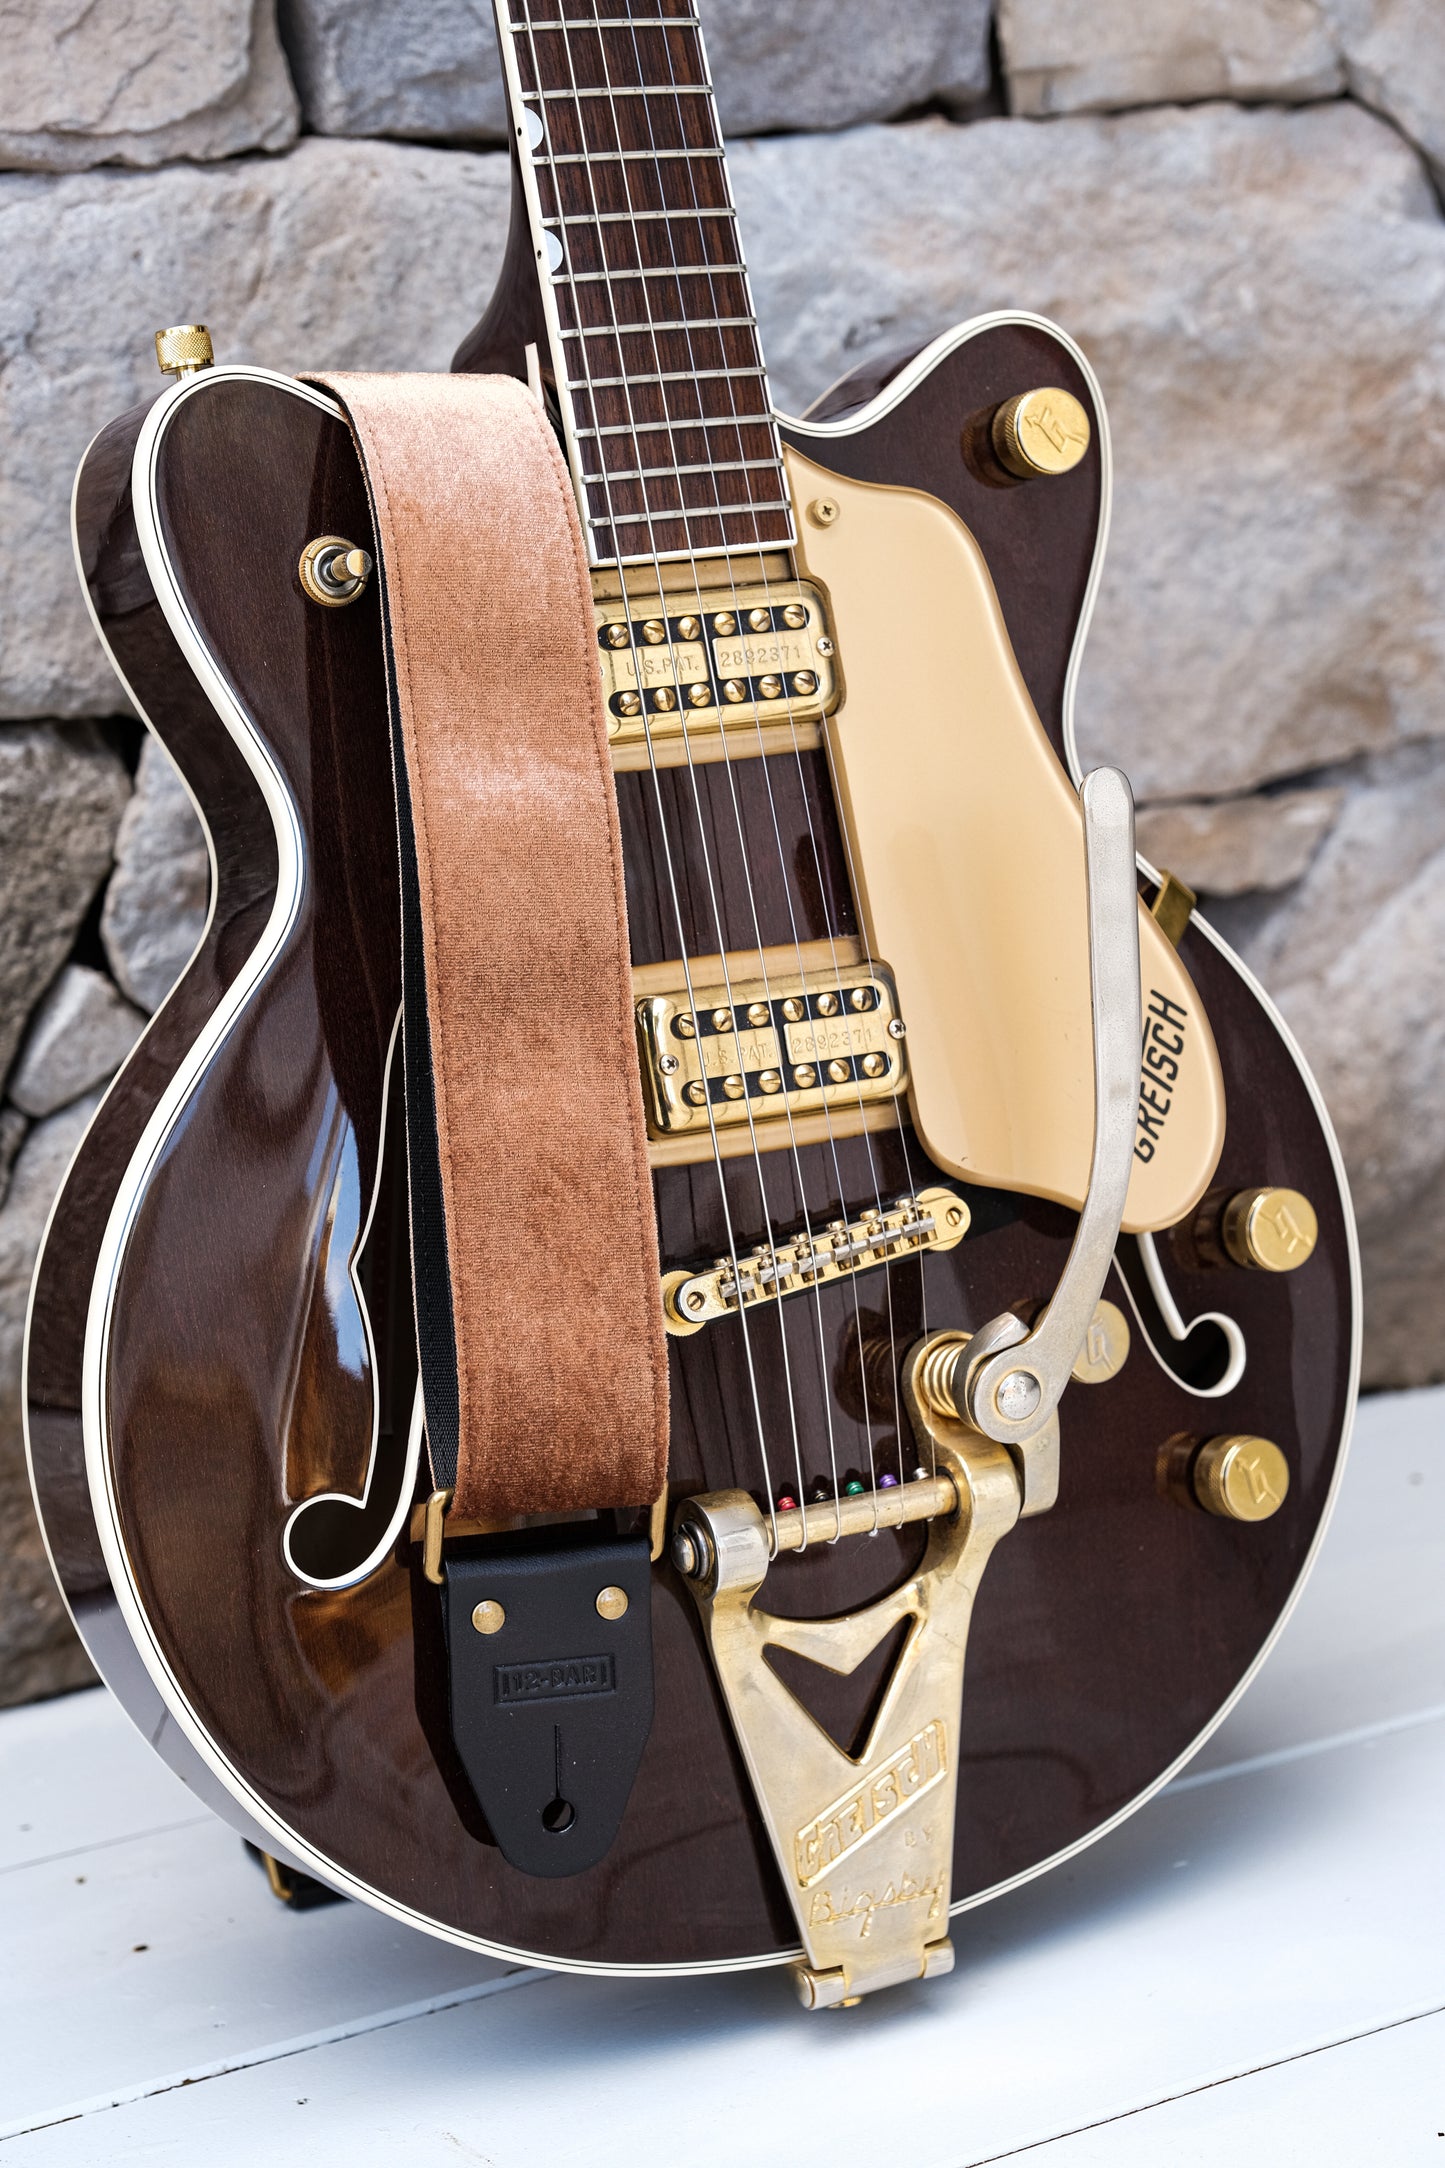 Brownie velvet vintage retro guitar strap